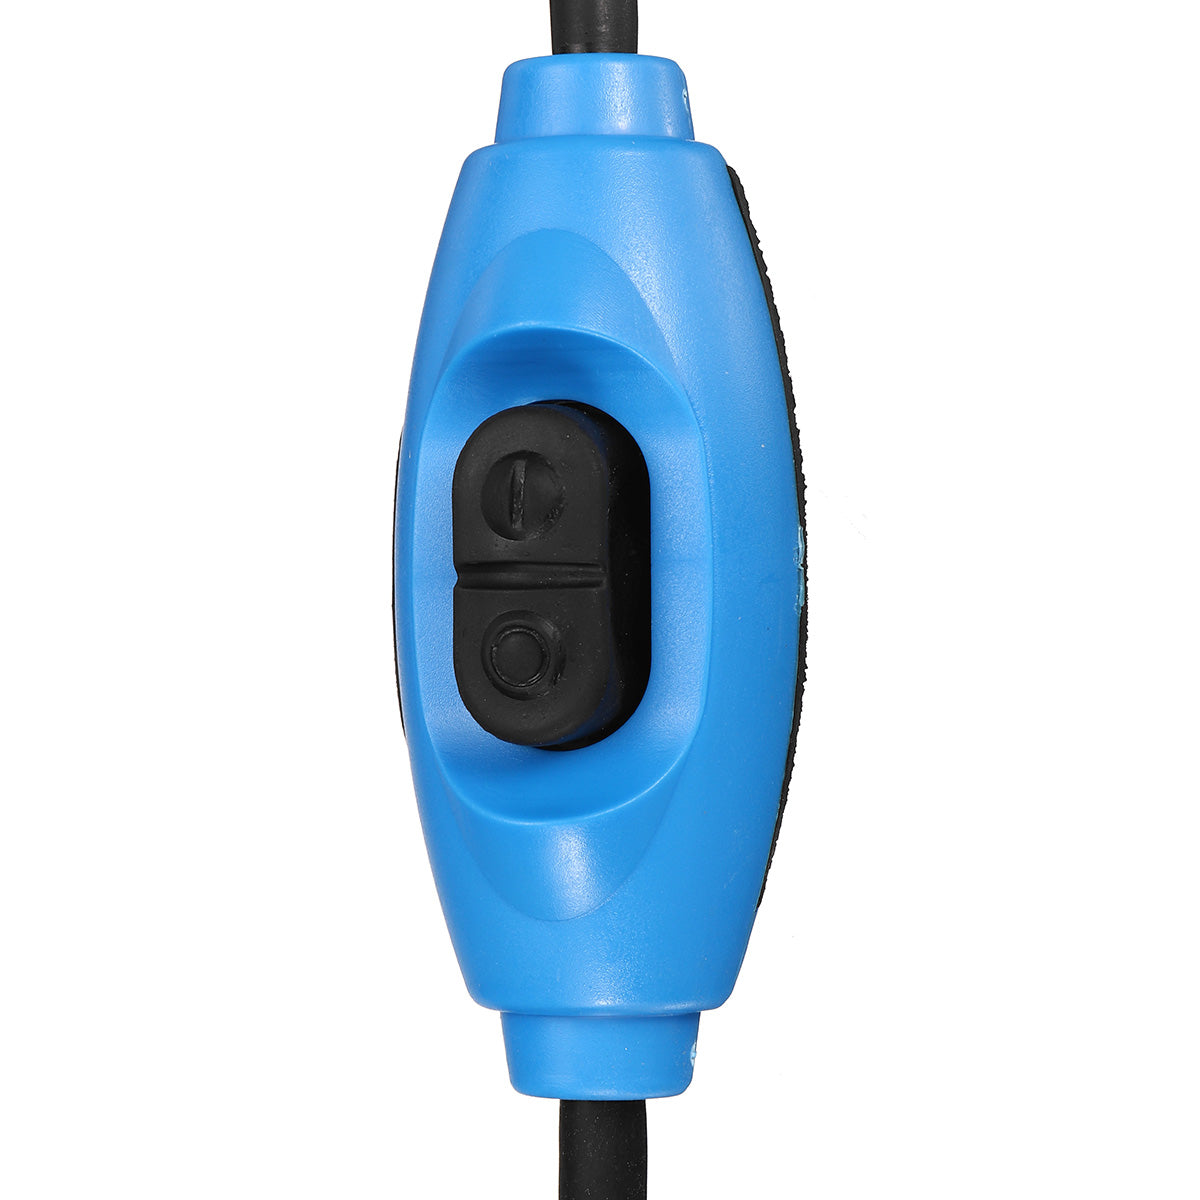 Dodger Blue 12V Car Camping Shower Spray Pump Kit Portable Outdoor Travel Hiking Clean Fast